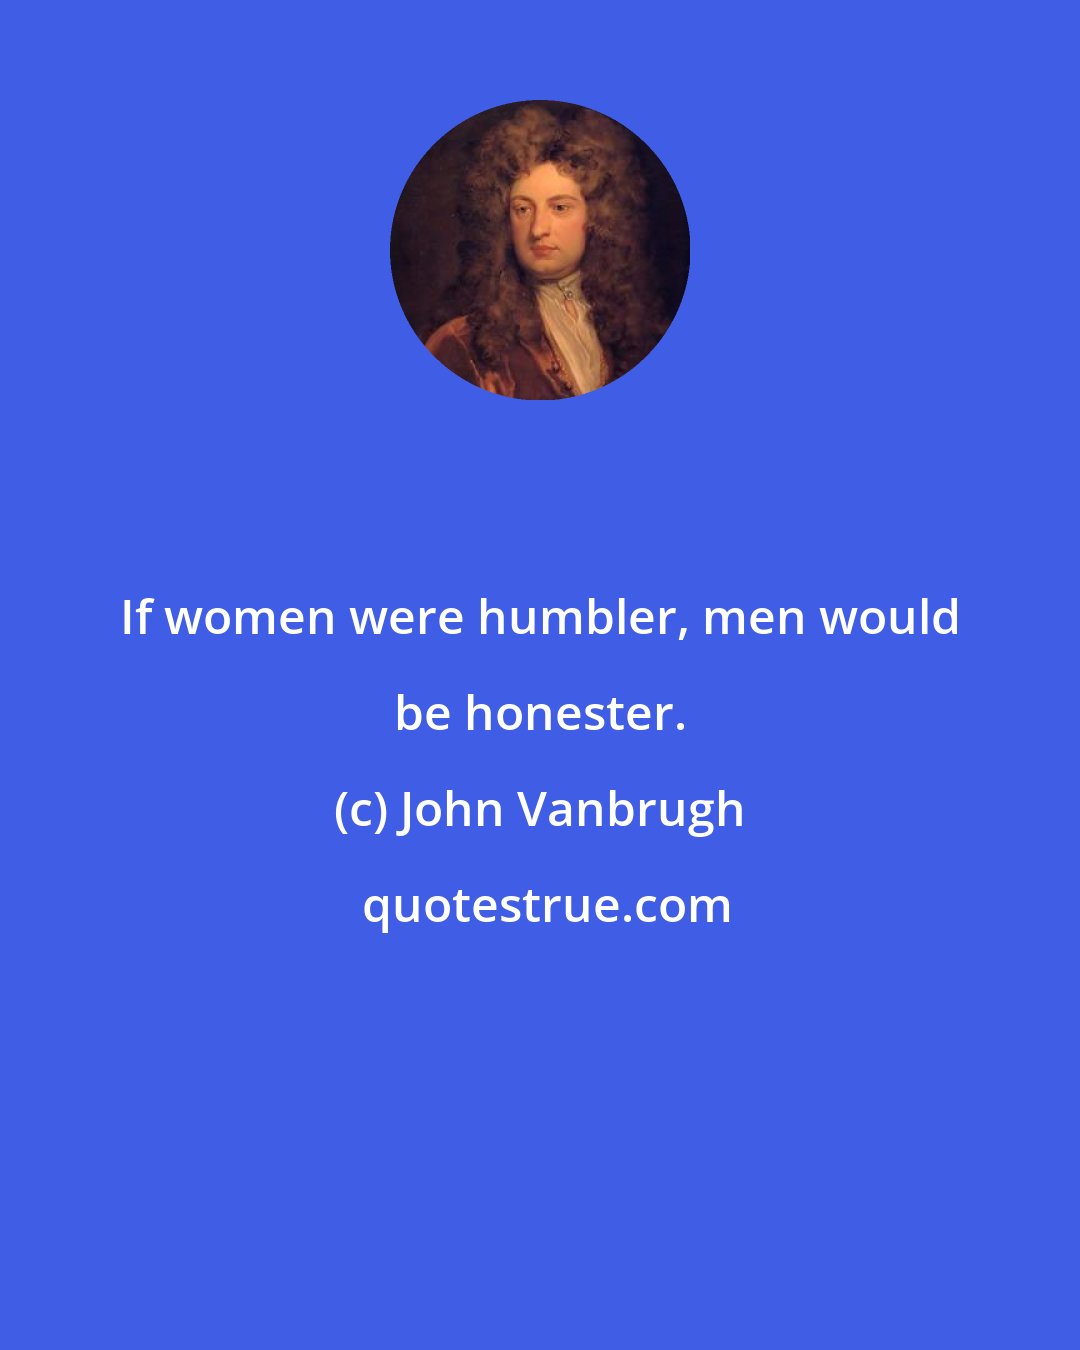 John Vanbrugh: If women were humbler, men would be honester.